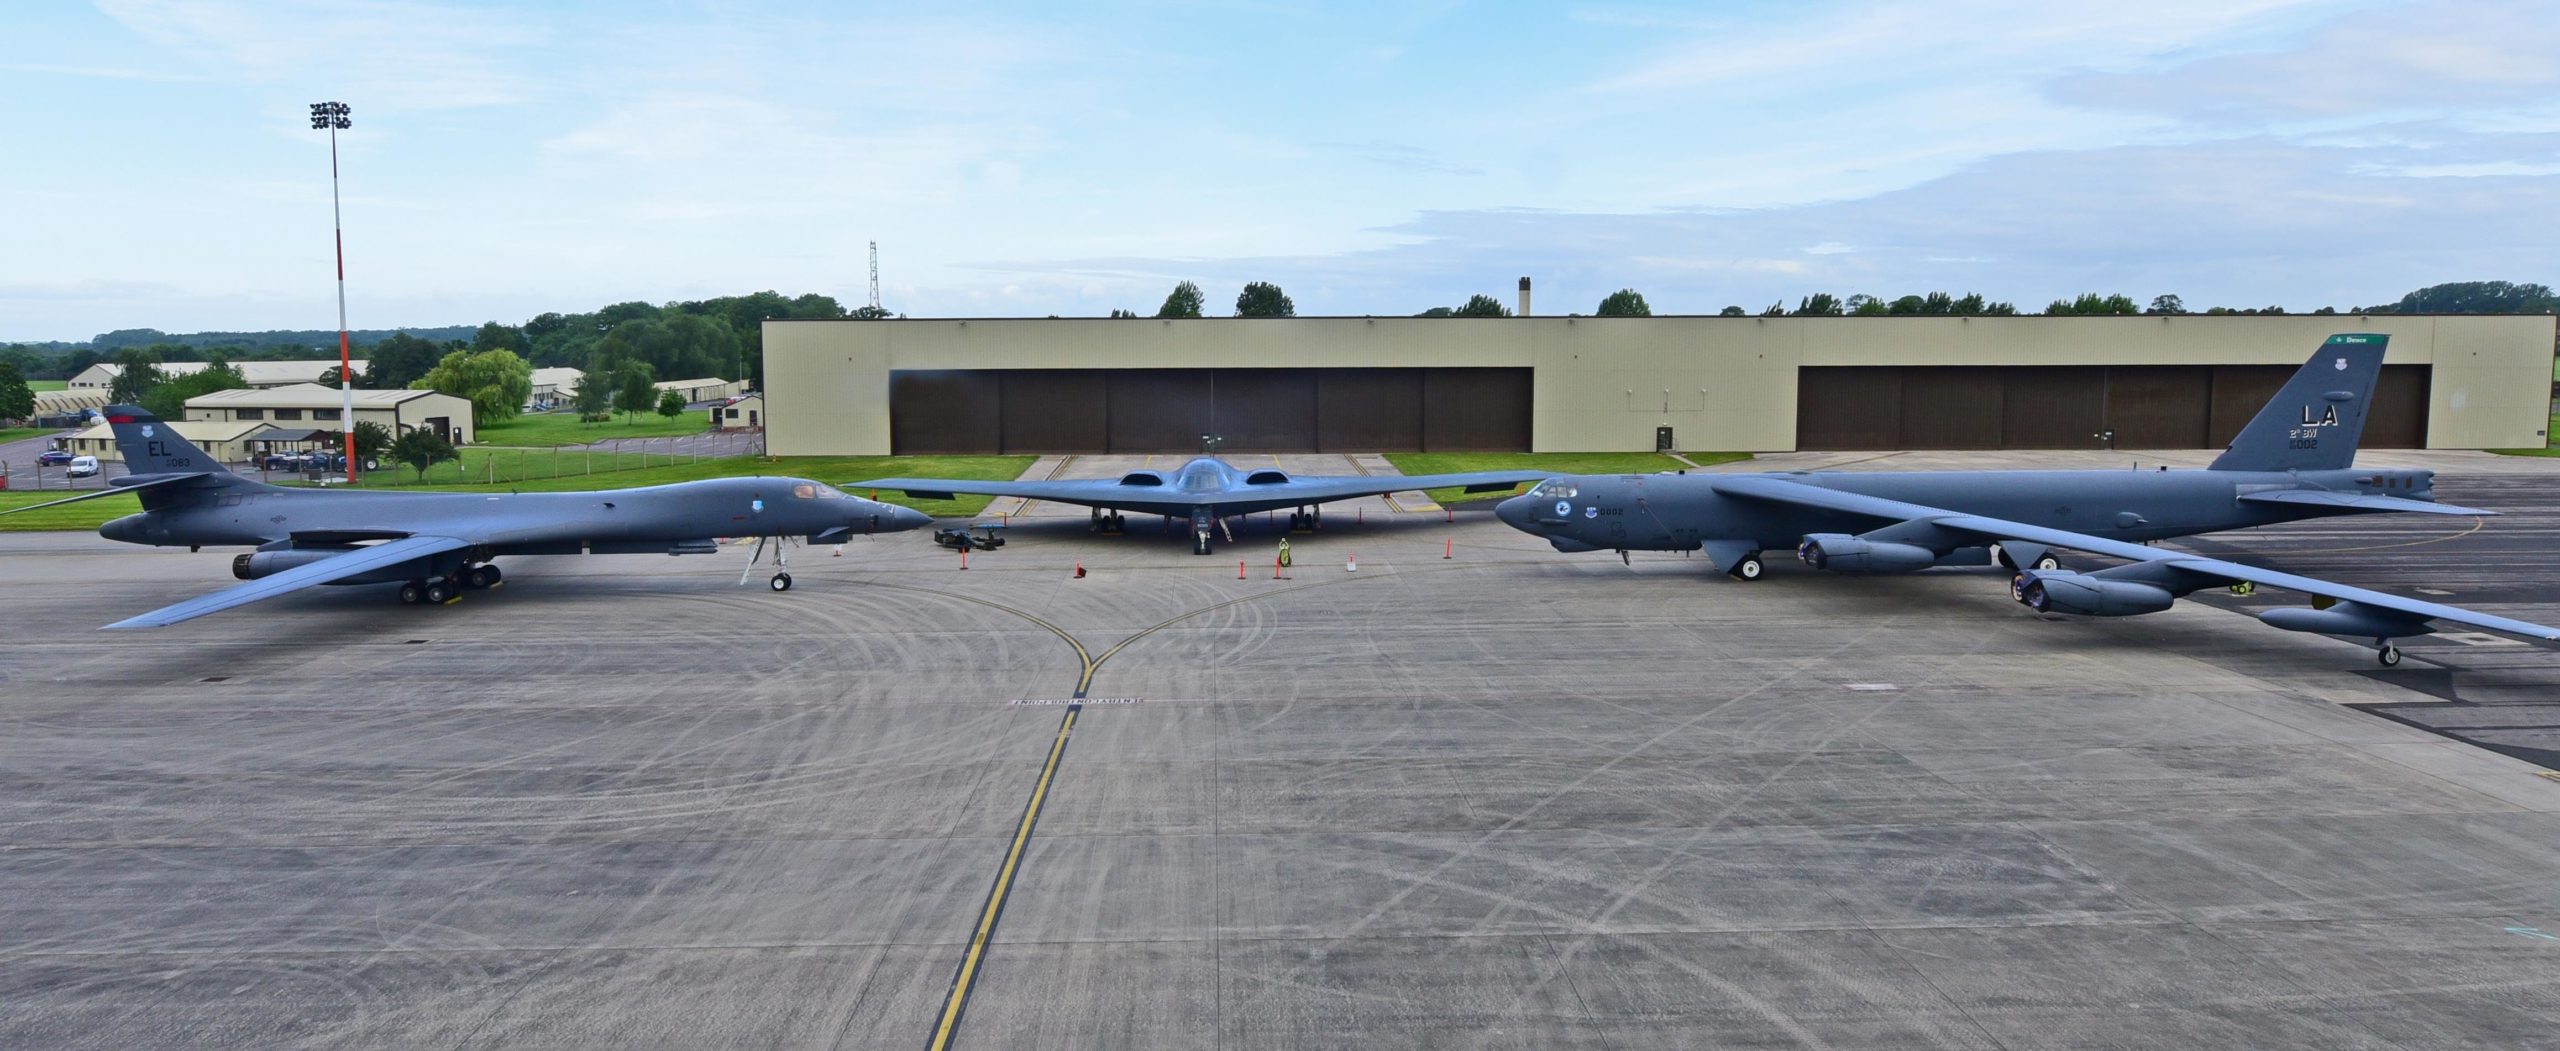 B-1 Lancer, B-2 Spirit, & B-52 Stratofortress